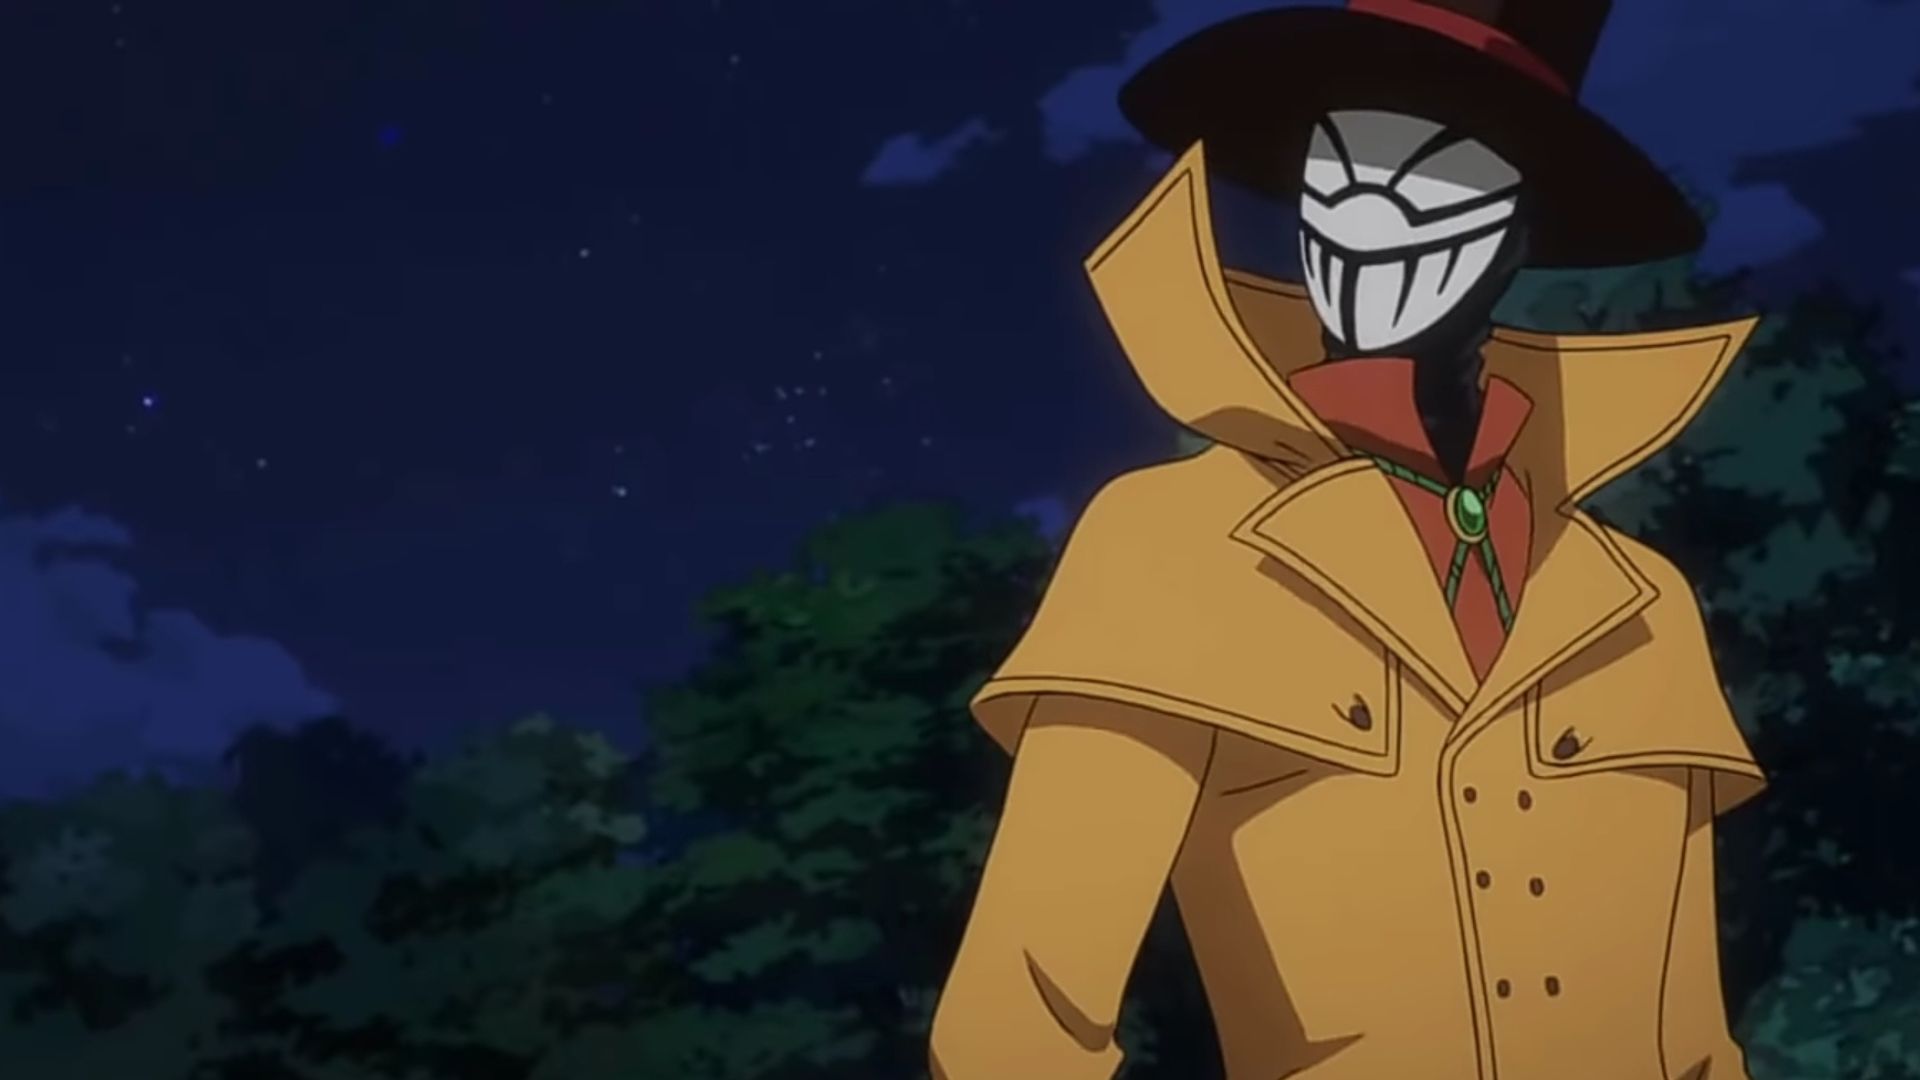 Mr. Compress as seen in the anime (Image via Studio Bones)